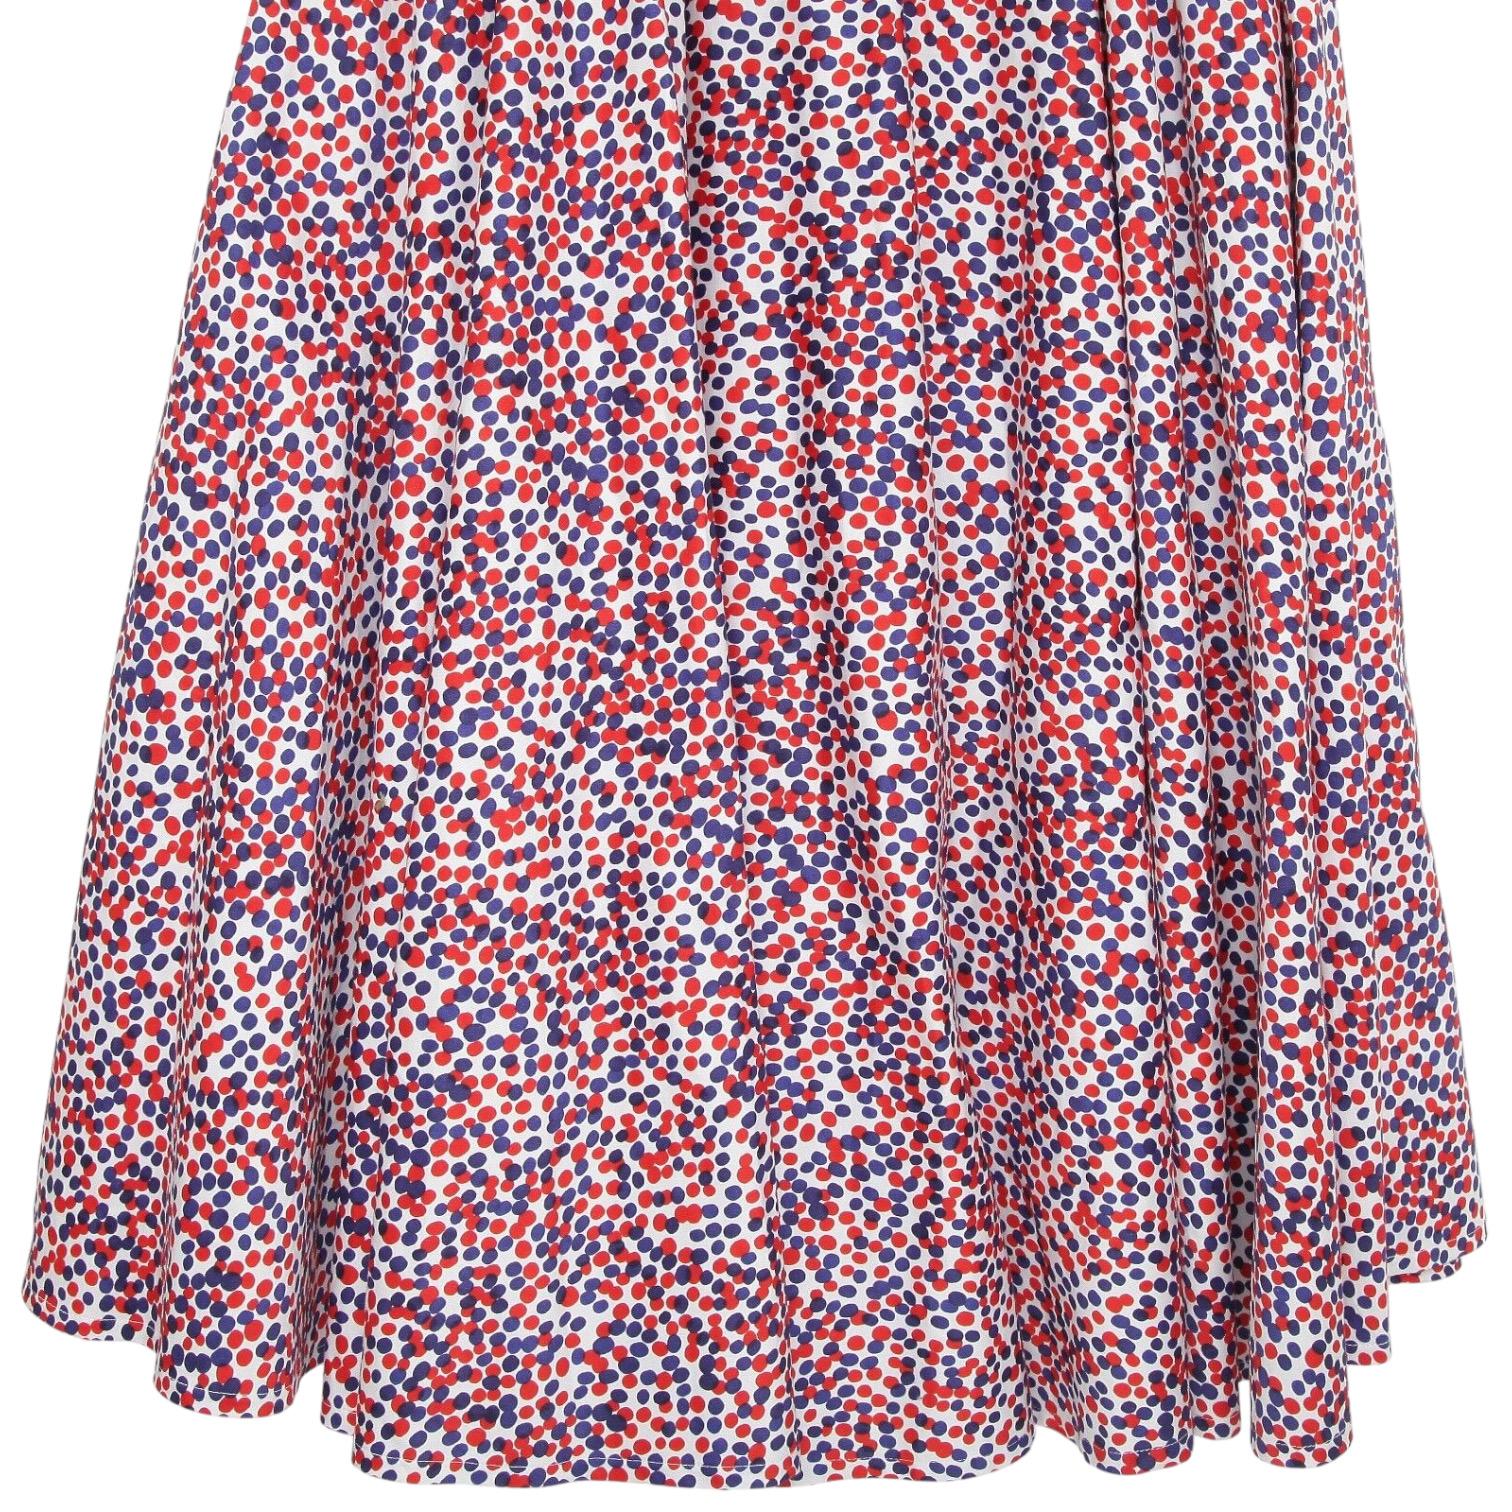 CAROLINA HERRERA Skirt Umbrella Polka Dot Full Maxi Cotton Blend Dress Sz 8 1